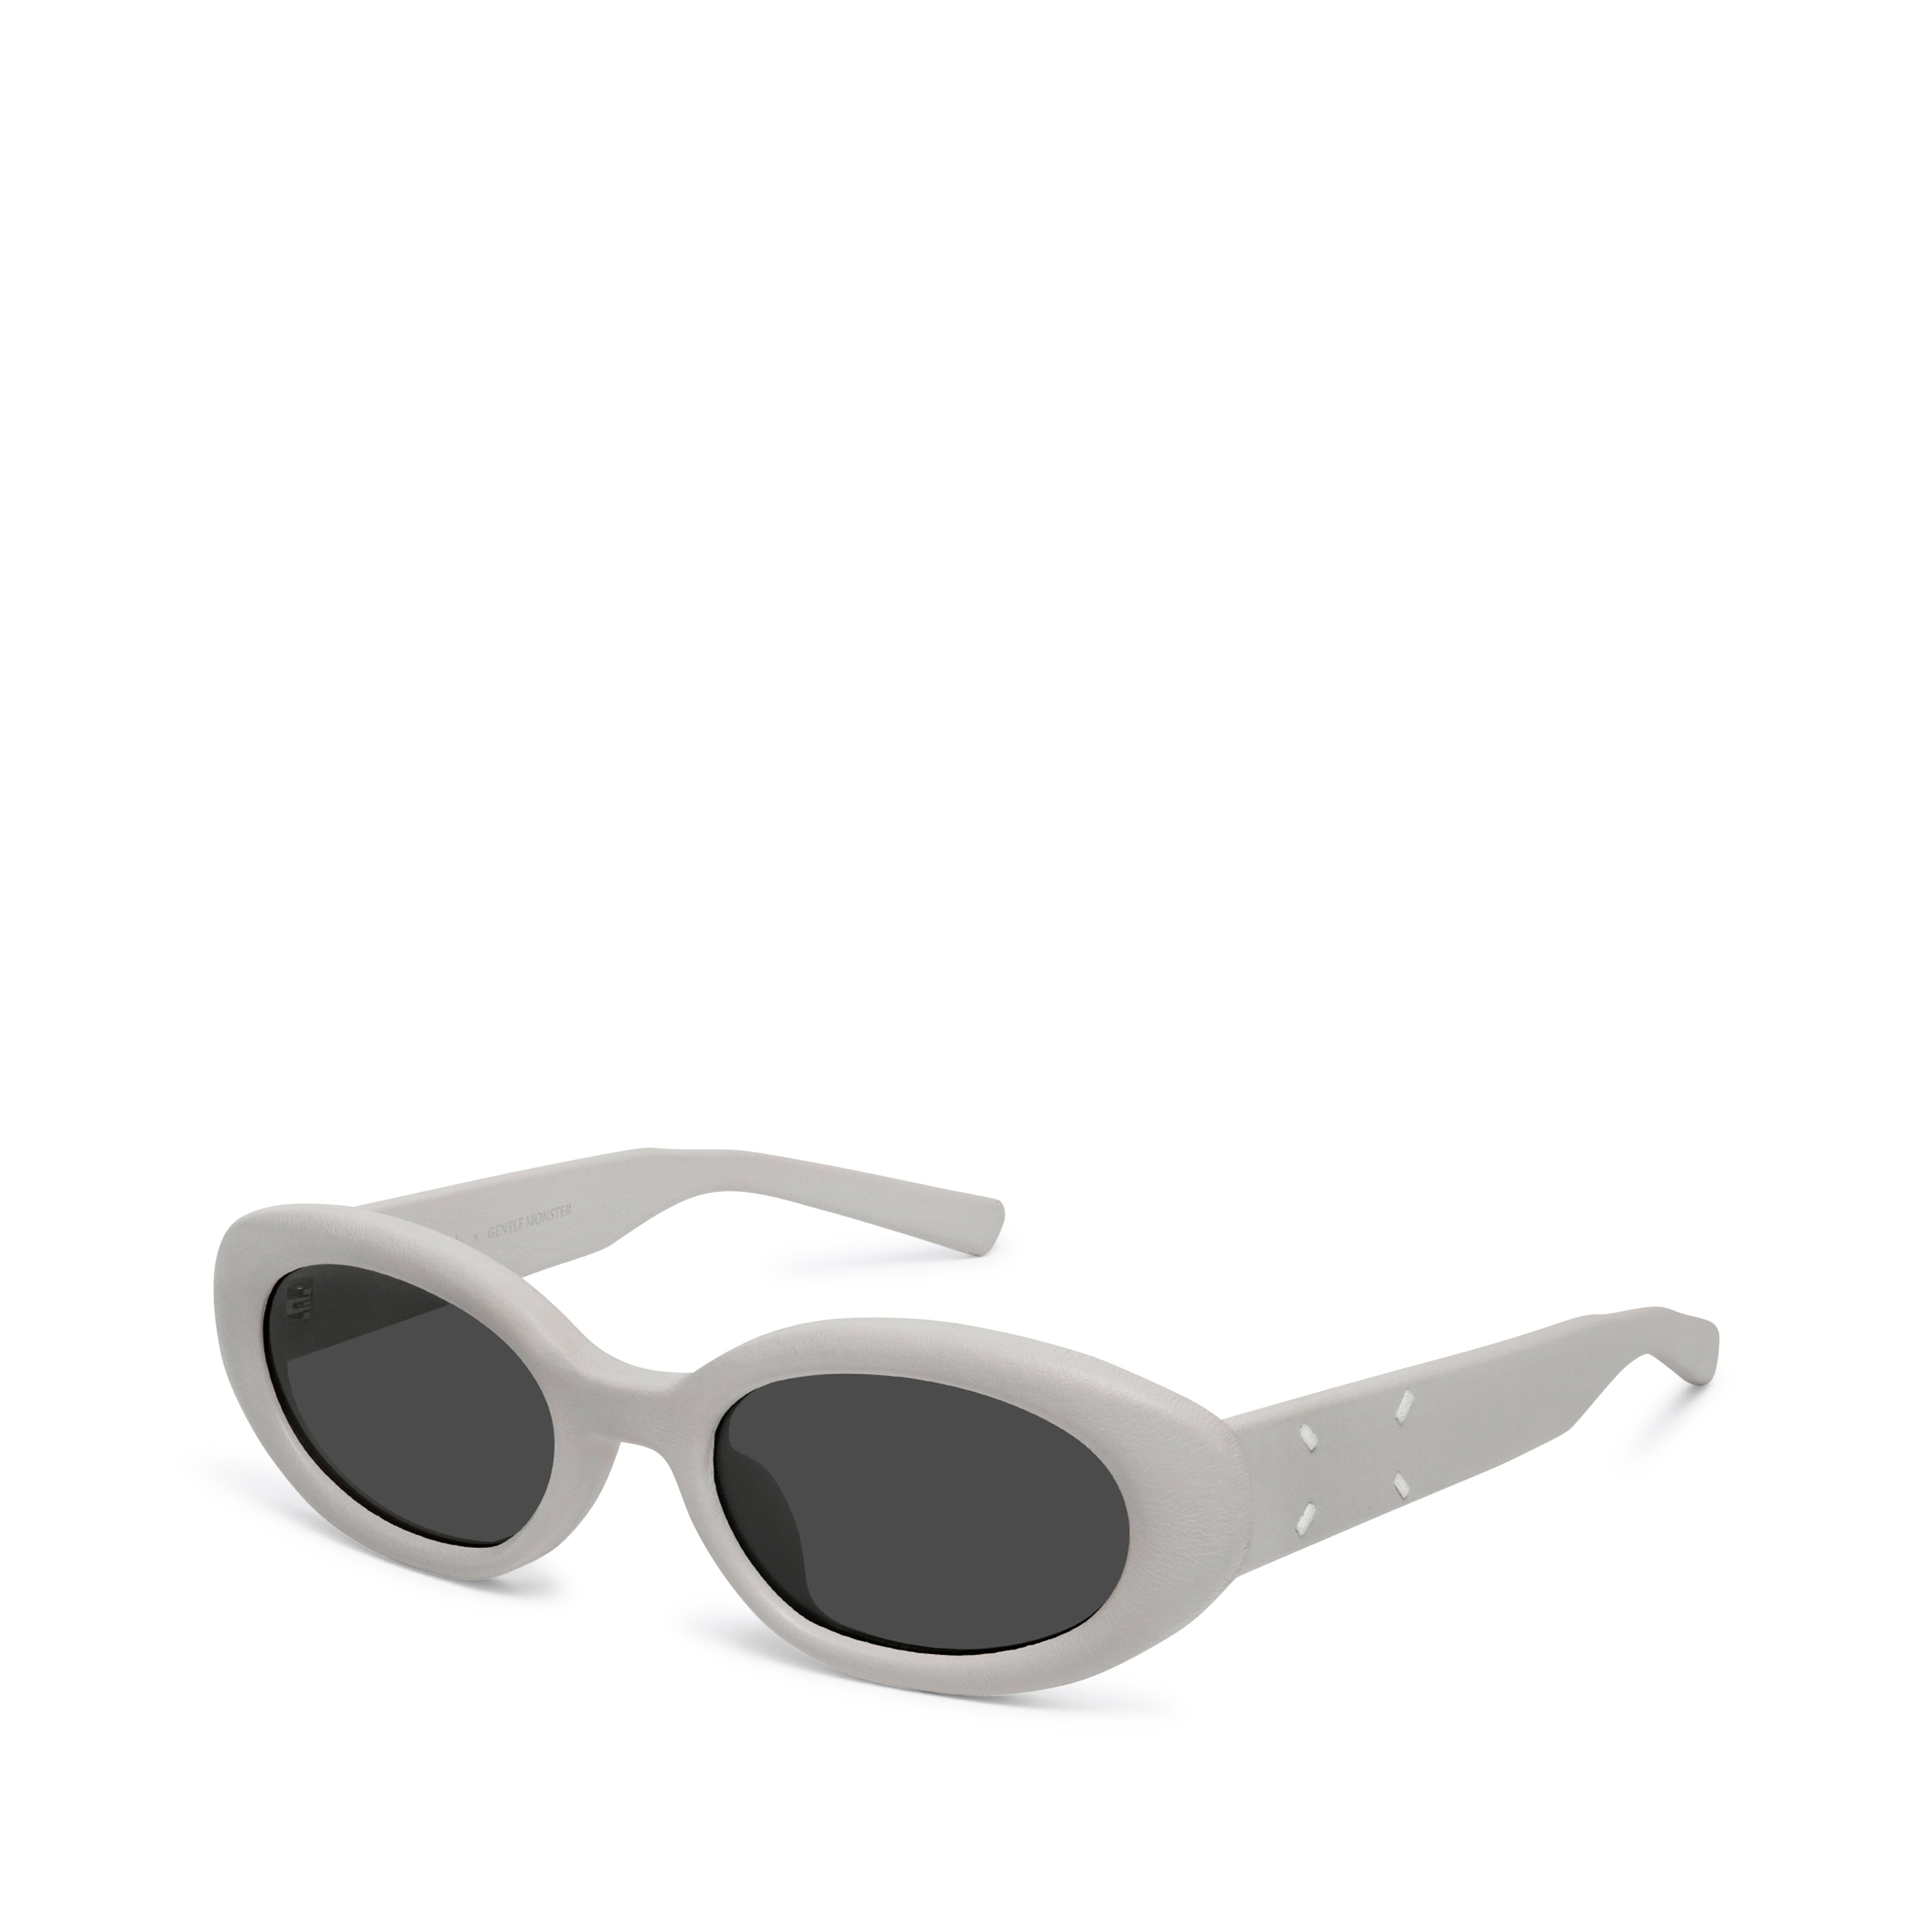 Maison Margiela x Gentle Monster - MM107 Leather-LIV1 Sunglasses - (White)